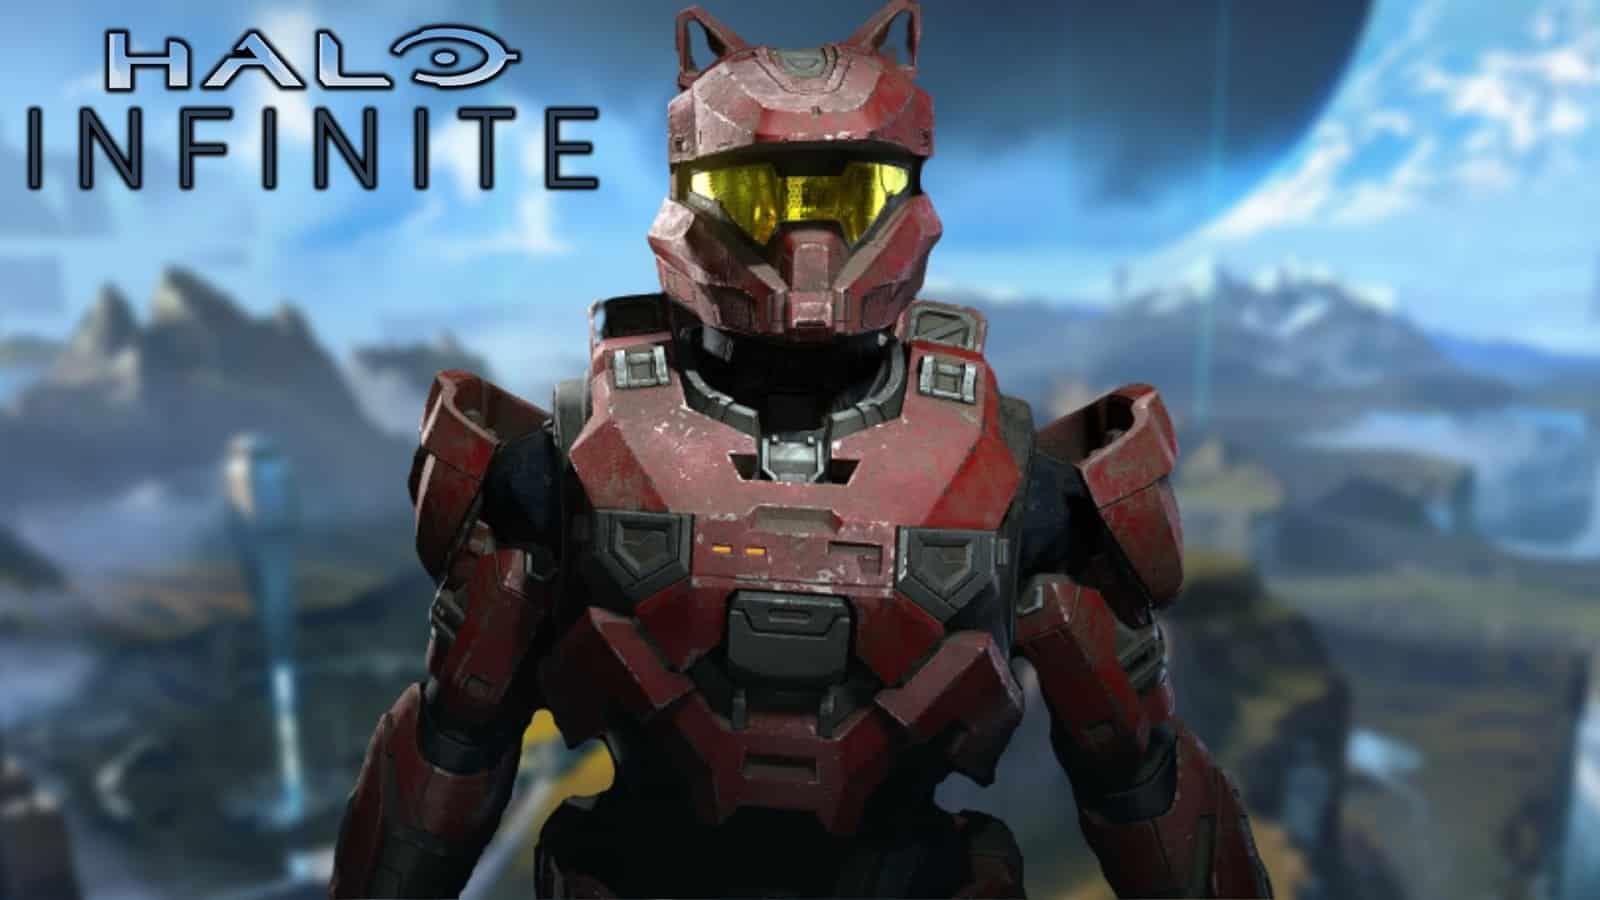 Halo Infinite Spartan wearing the cat ears helmet